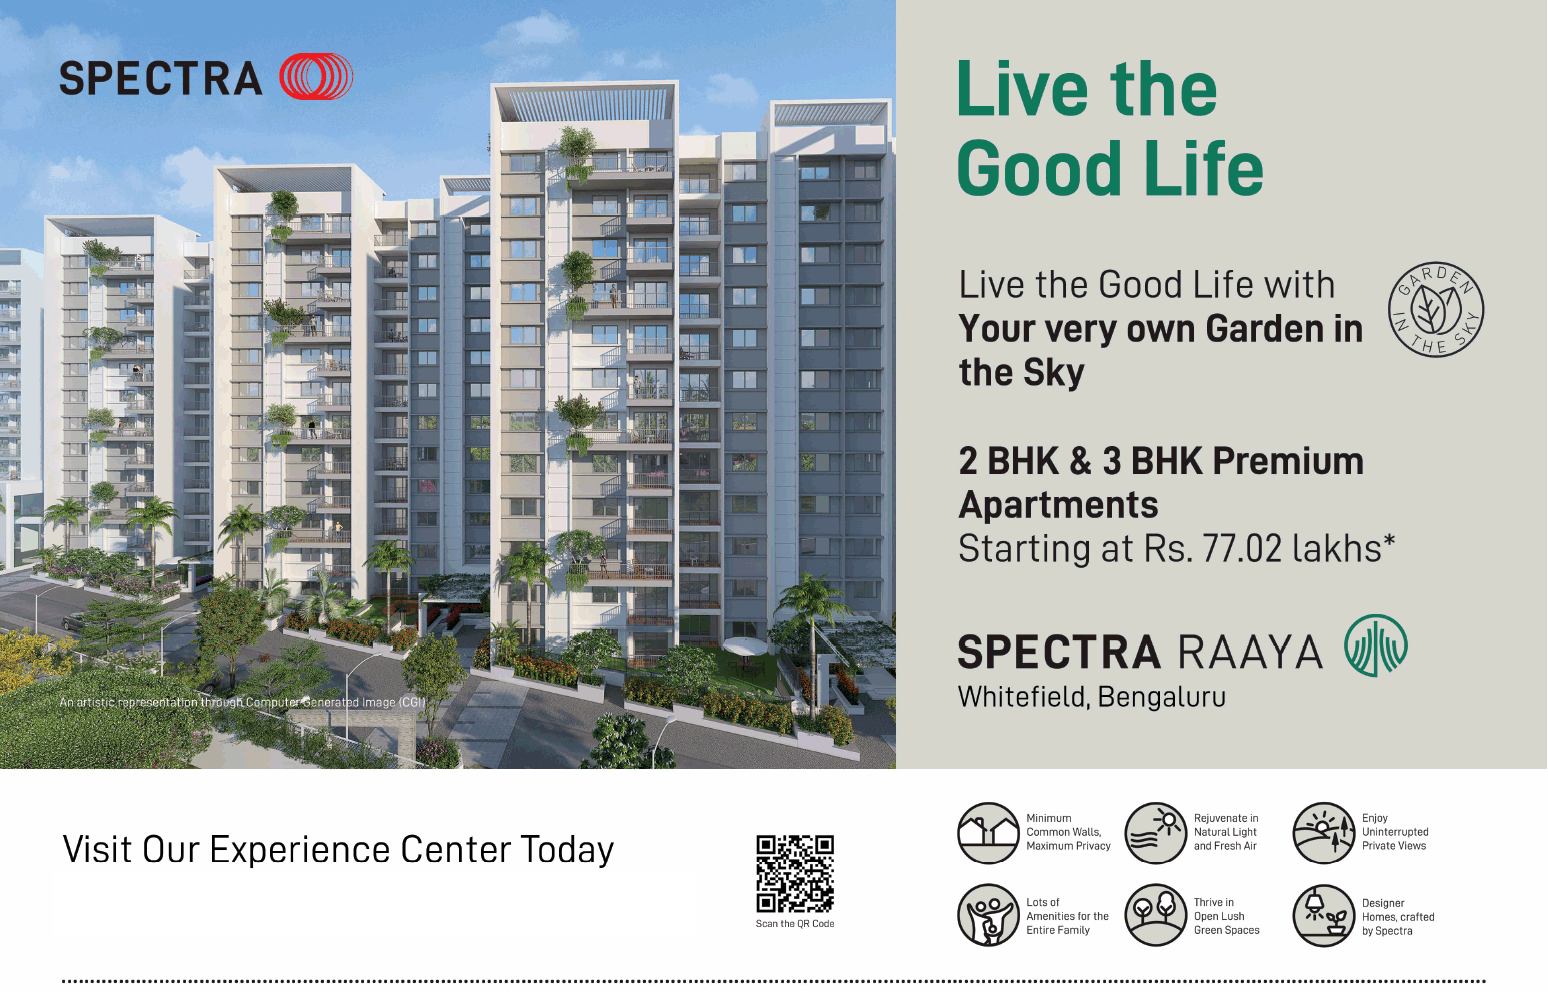 Premium apartments starting at Rs 77.02 lakh at Spectra Raaya in Bangalore Update